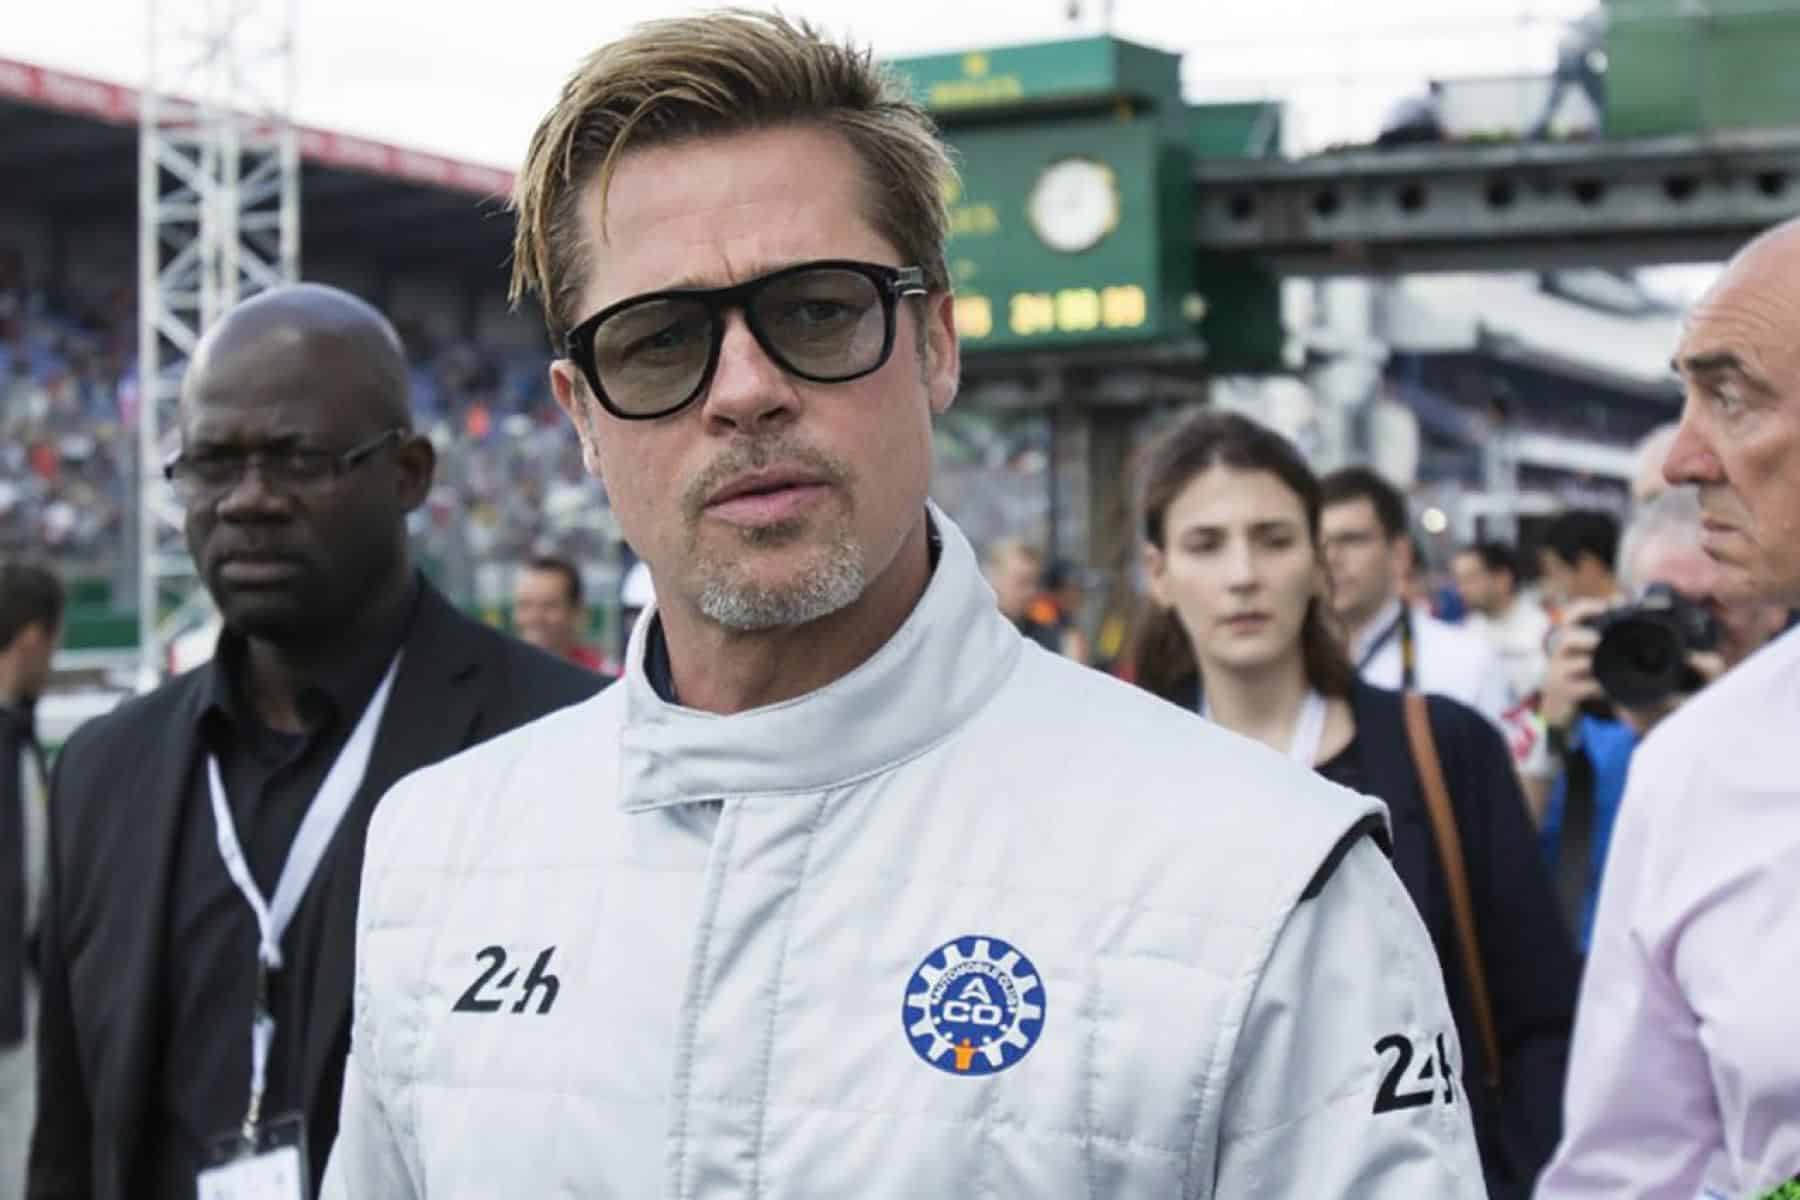 - Brad Pitt F1 movie : Everything We Know So far (UPDATED)